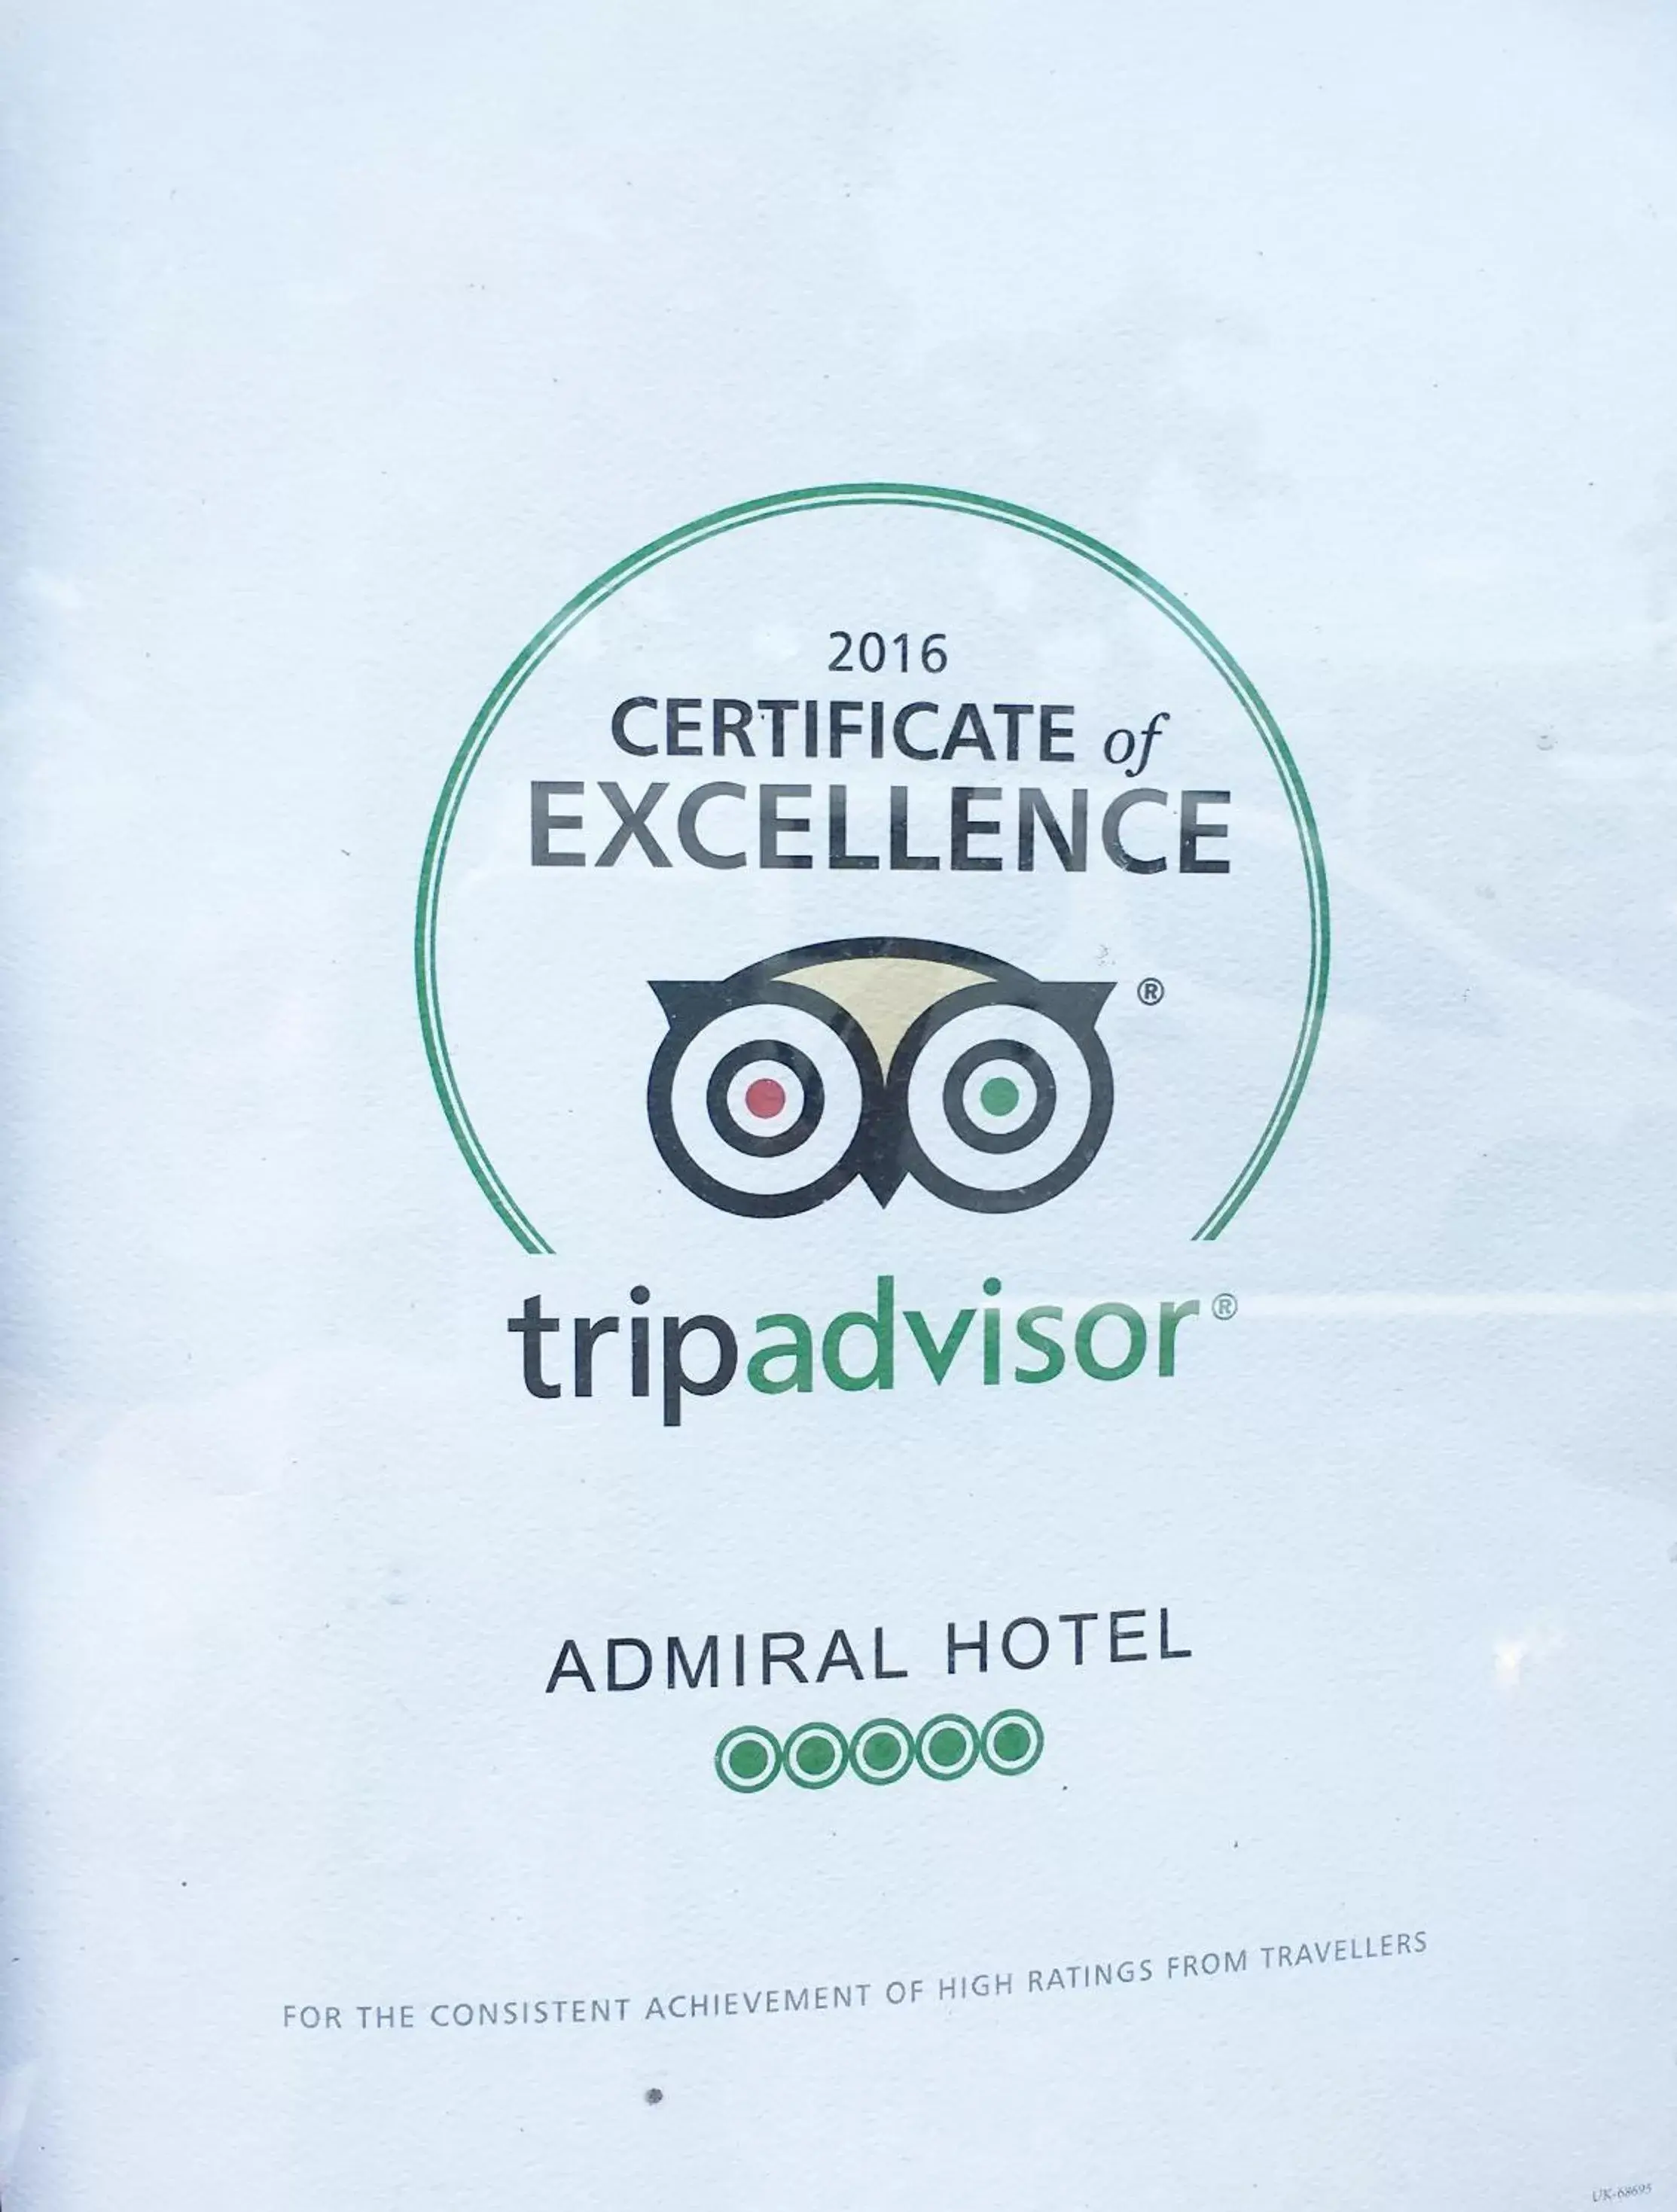 Certificate/Award, Logo/Certificate/Sign/Award in Admiral Hotel